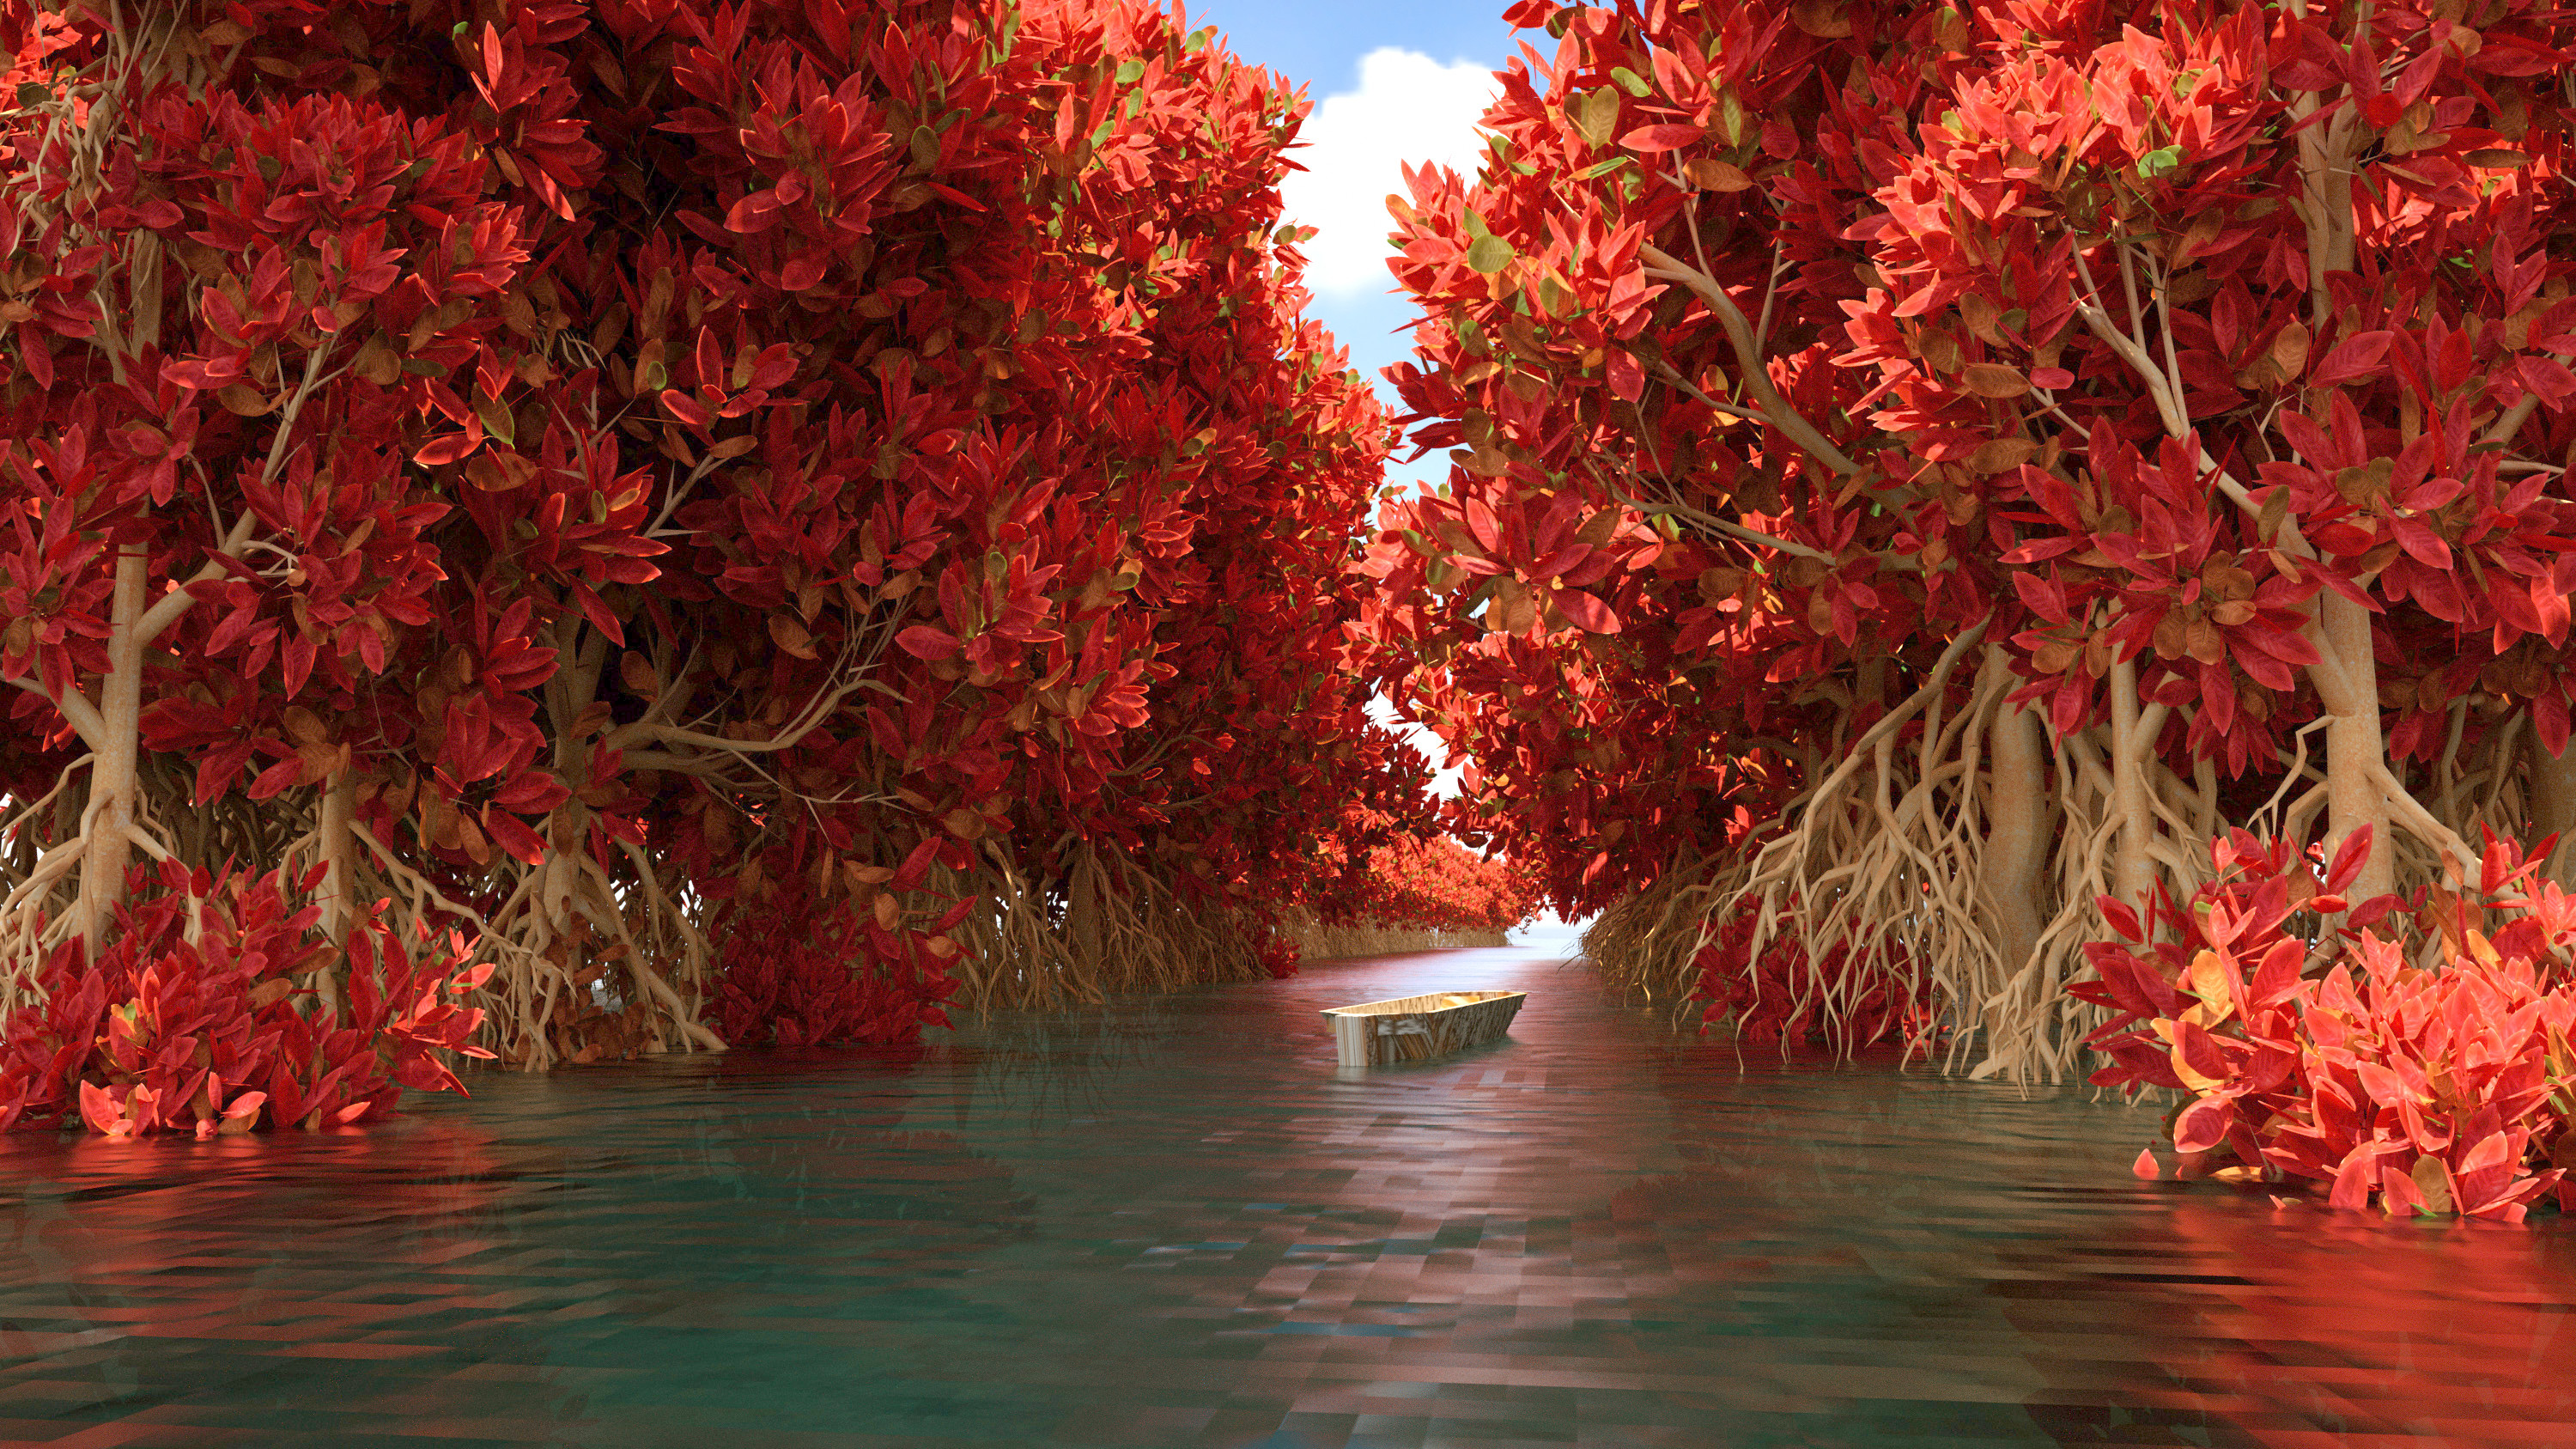 Kurt Ian Ferrer Fan Art Landscape River Lake Trees Red Leaves Reflection Digital Painting Boat Digit 3000x1687